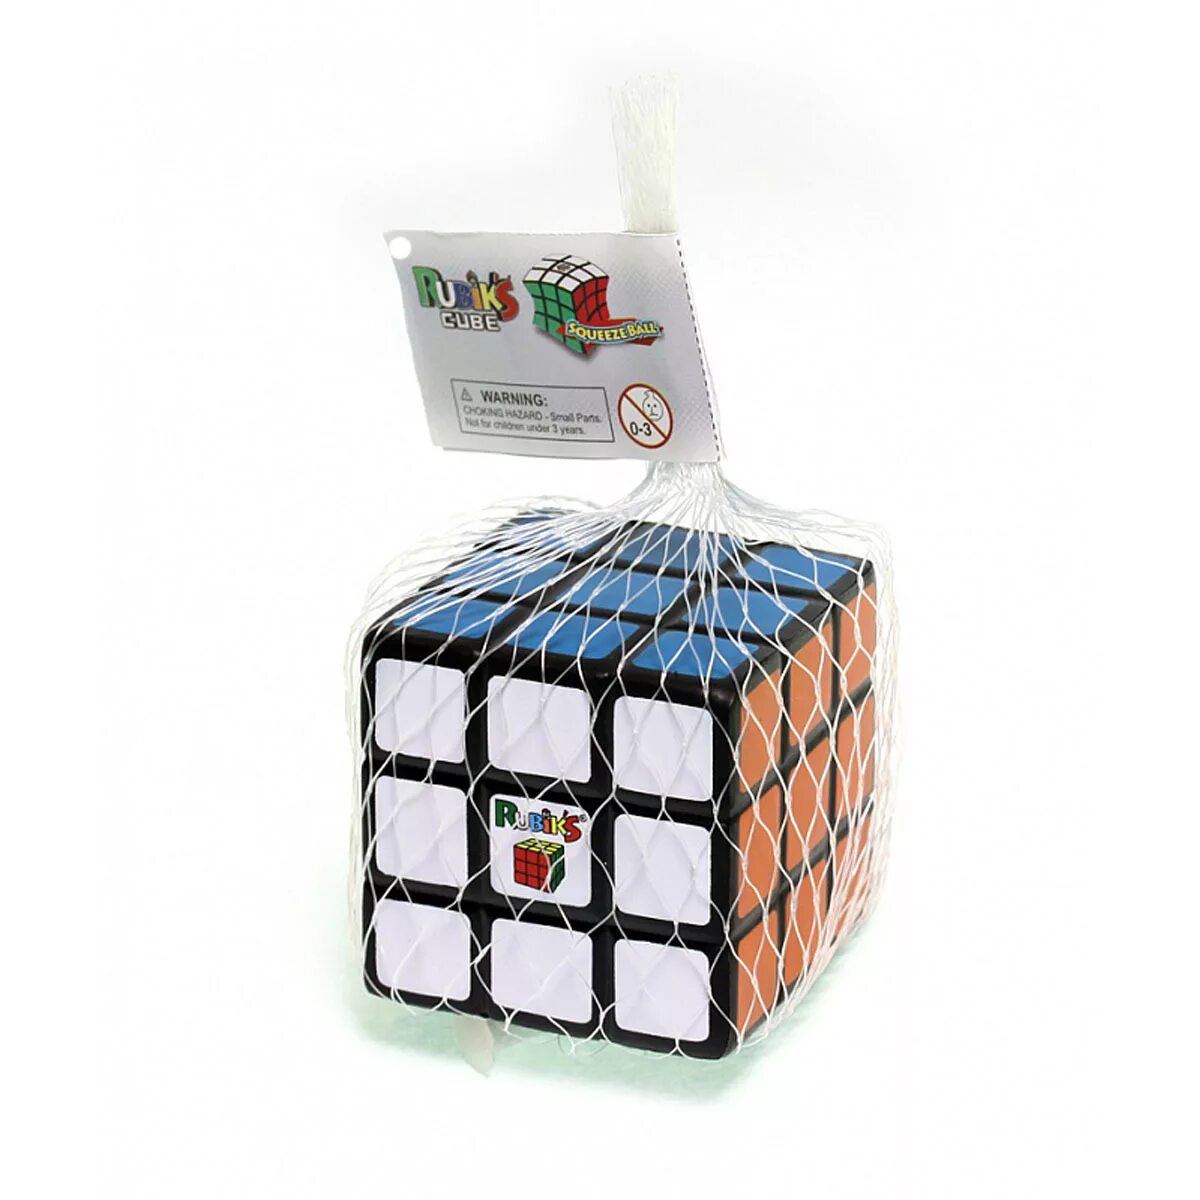 Кубик рубик антистресс антистресс. Головоломка Rubik's мишка. Головоломка кубик антистресс. Мягкий кубик Рубика. Включи кубики есть